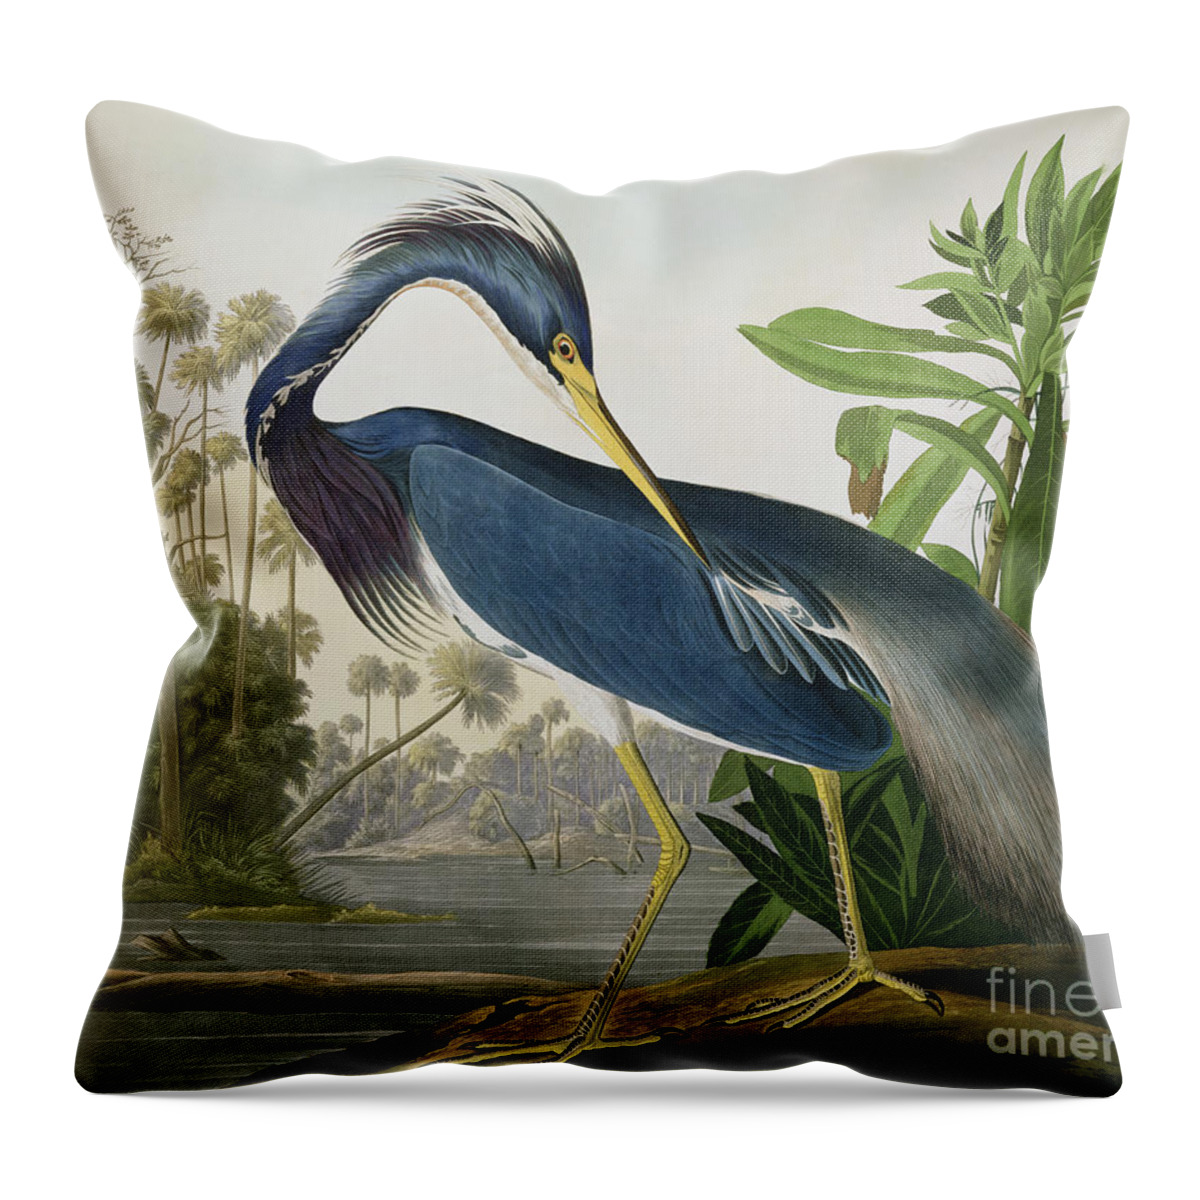 #faatoppicks Throw Pillow featuring the painting Louisiana Heron by John James Audubon